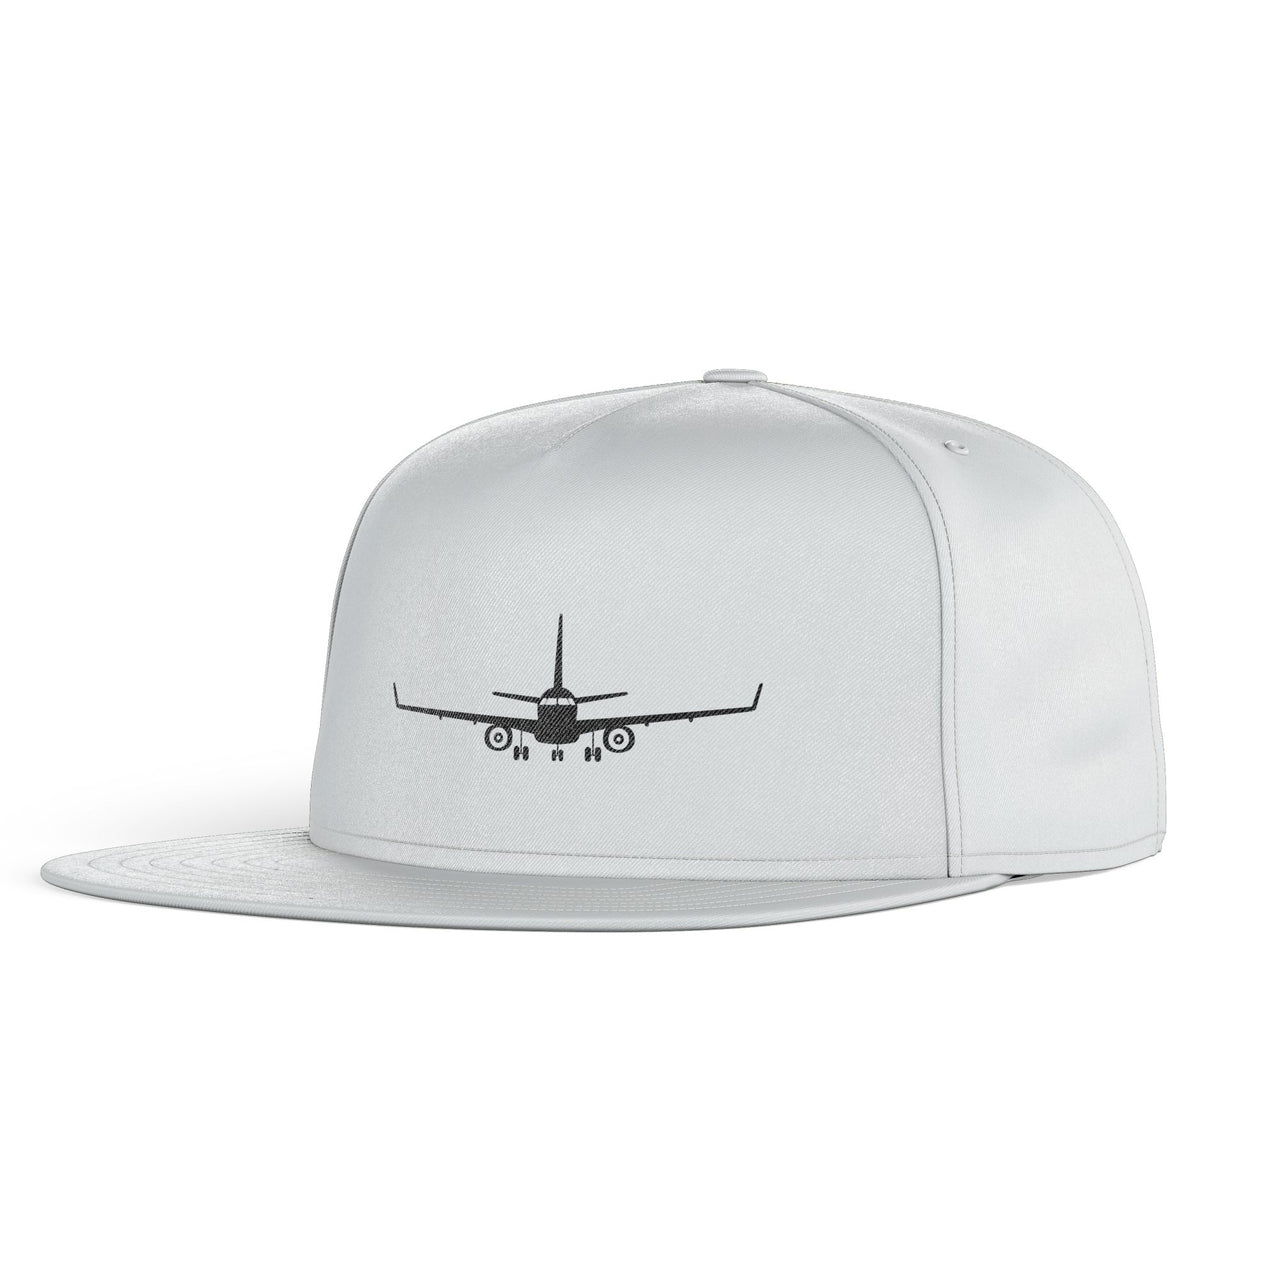 Embraer E-190 Silhouette Plane Designed Snapback Caps & Hats